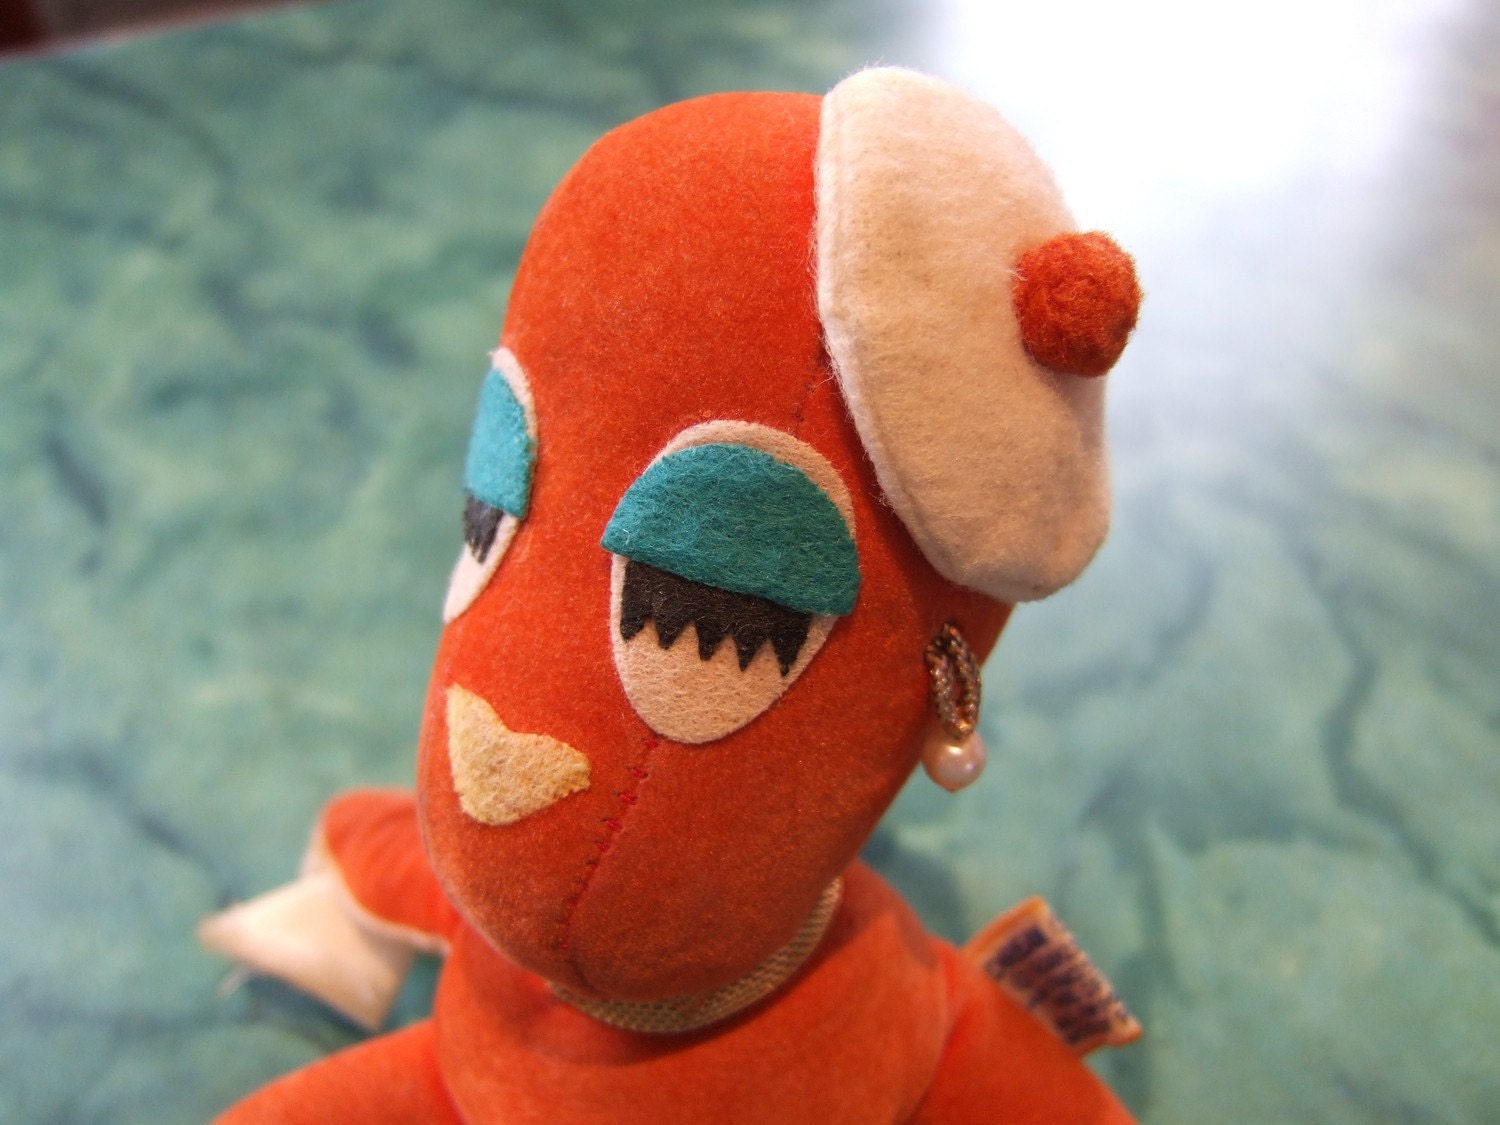 1960s Dakin octopus stuffed animal toy by TheShakes on Etsy